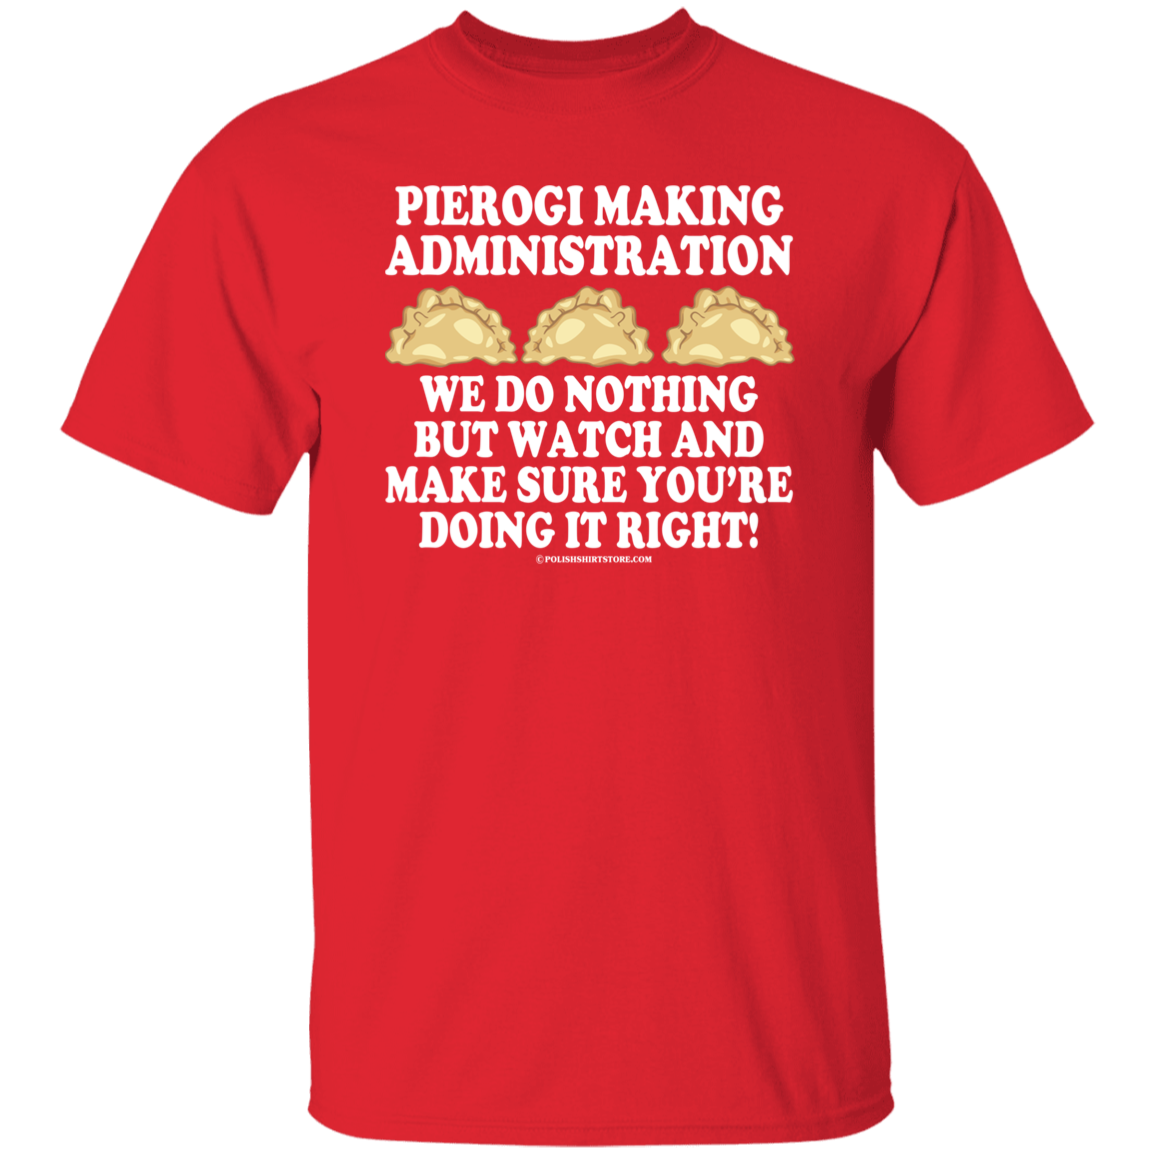 Pierogi Making Administration Apparel CustomCat G500 5.3 oz. T-Shirt Red S